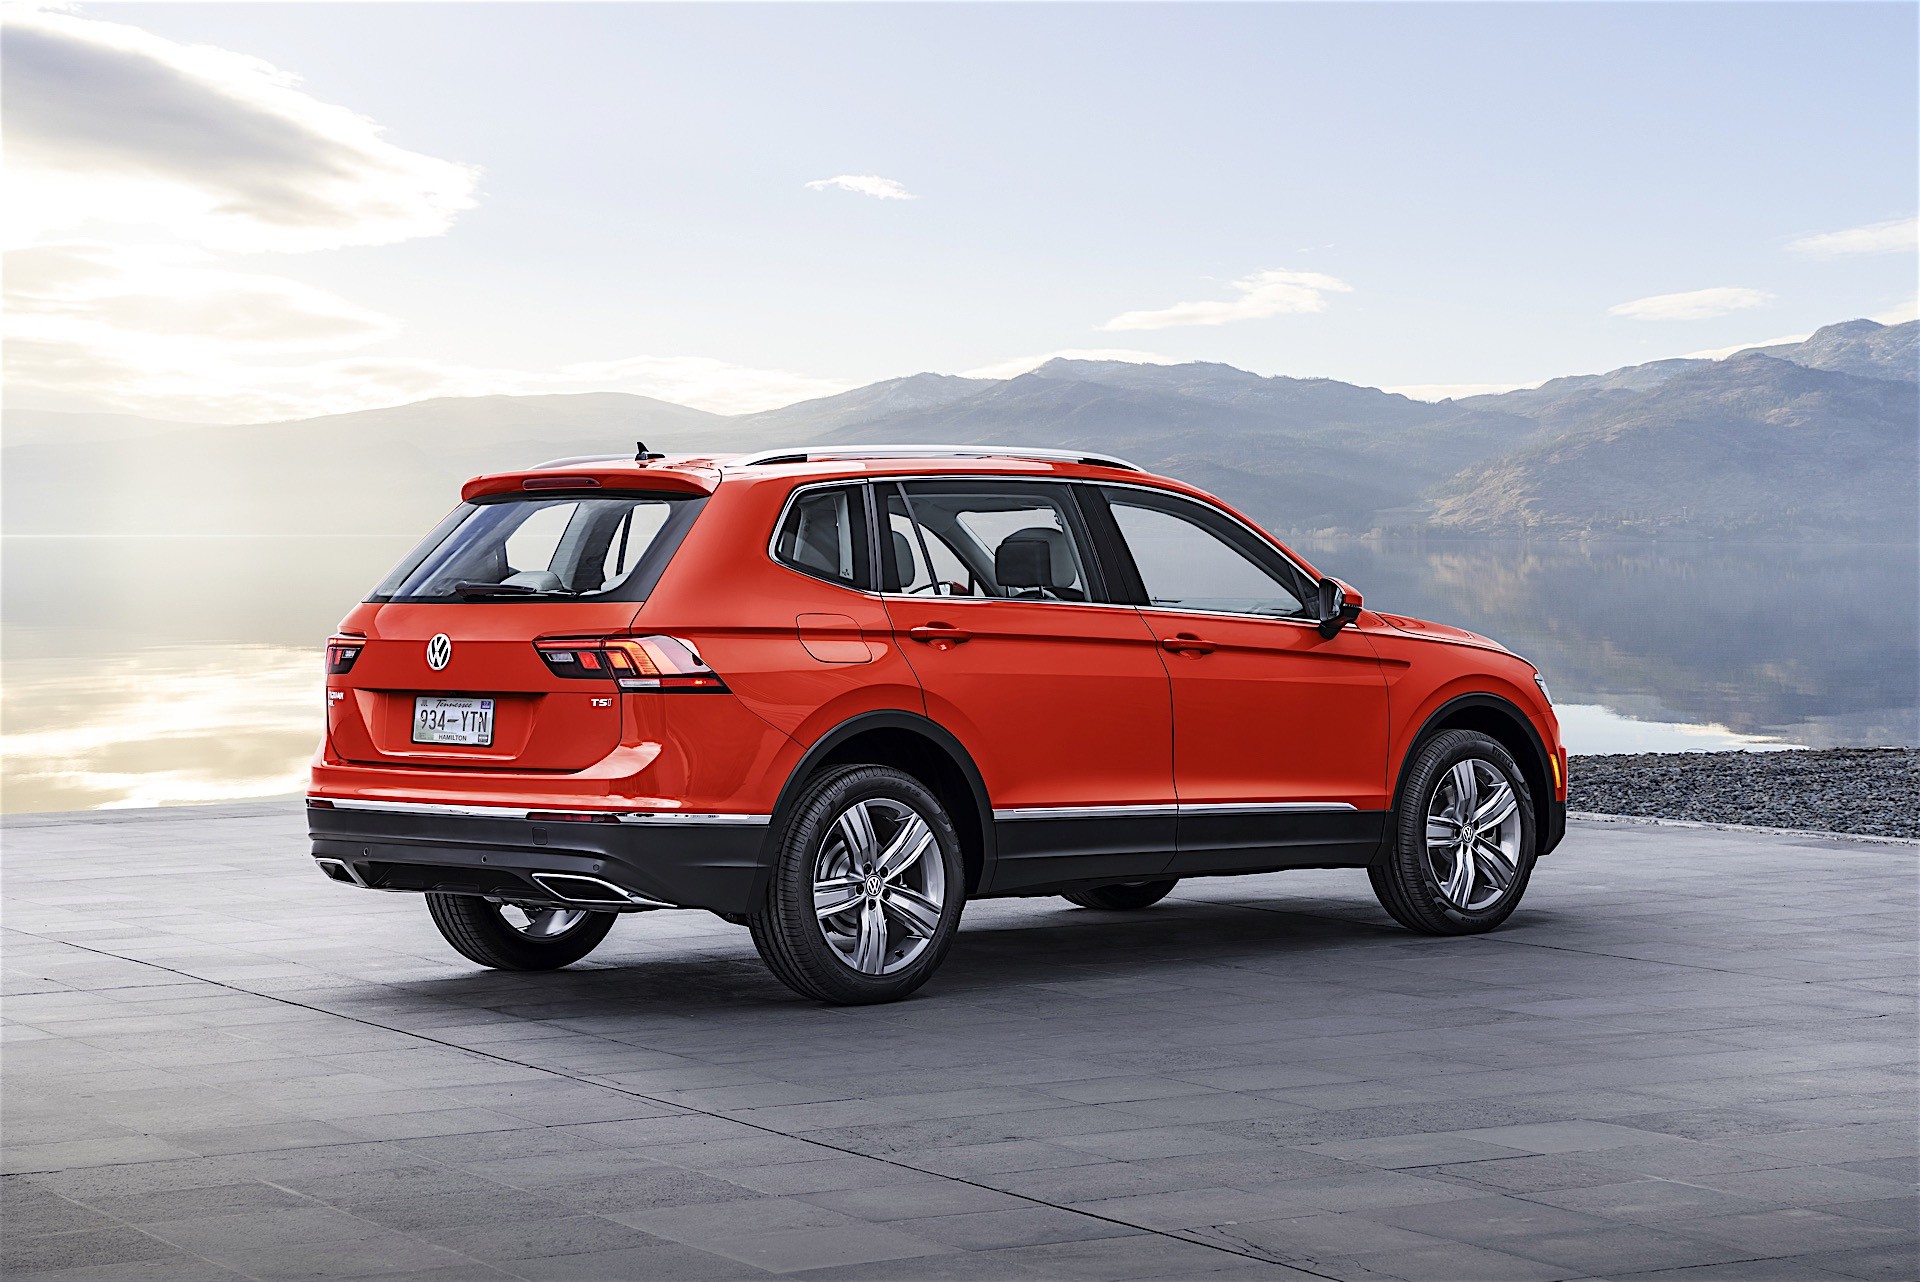 Us Spec 2018 Volkswagen Tiguan Gets Extended Wheelbase Version As